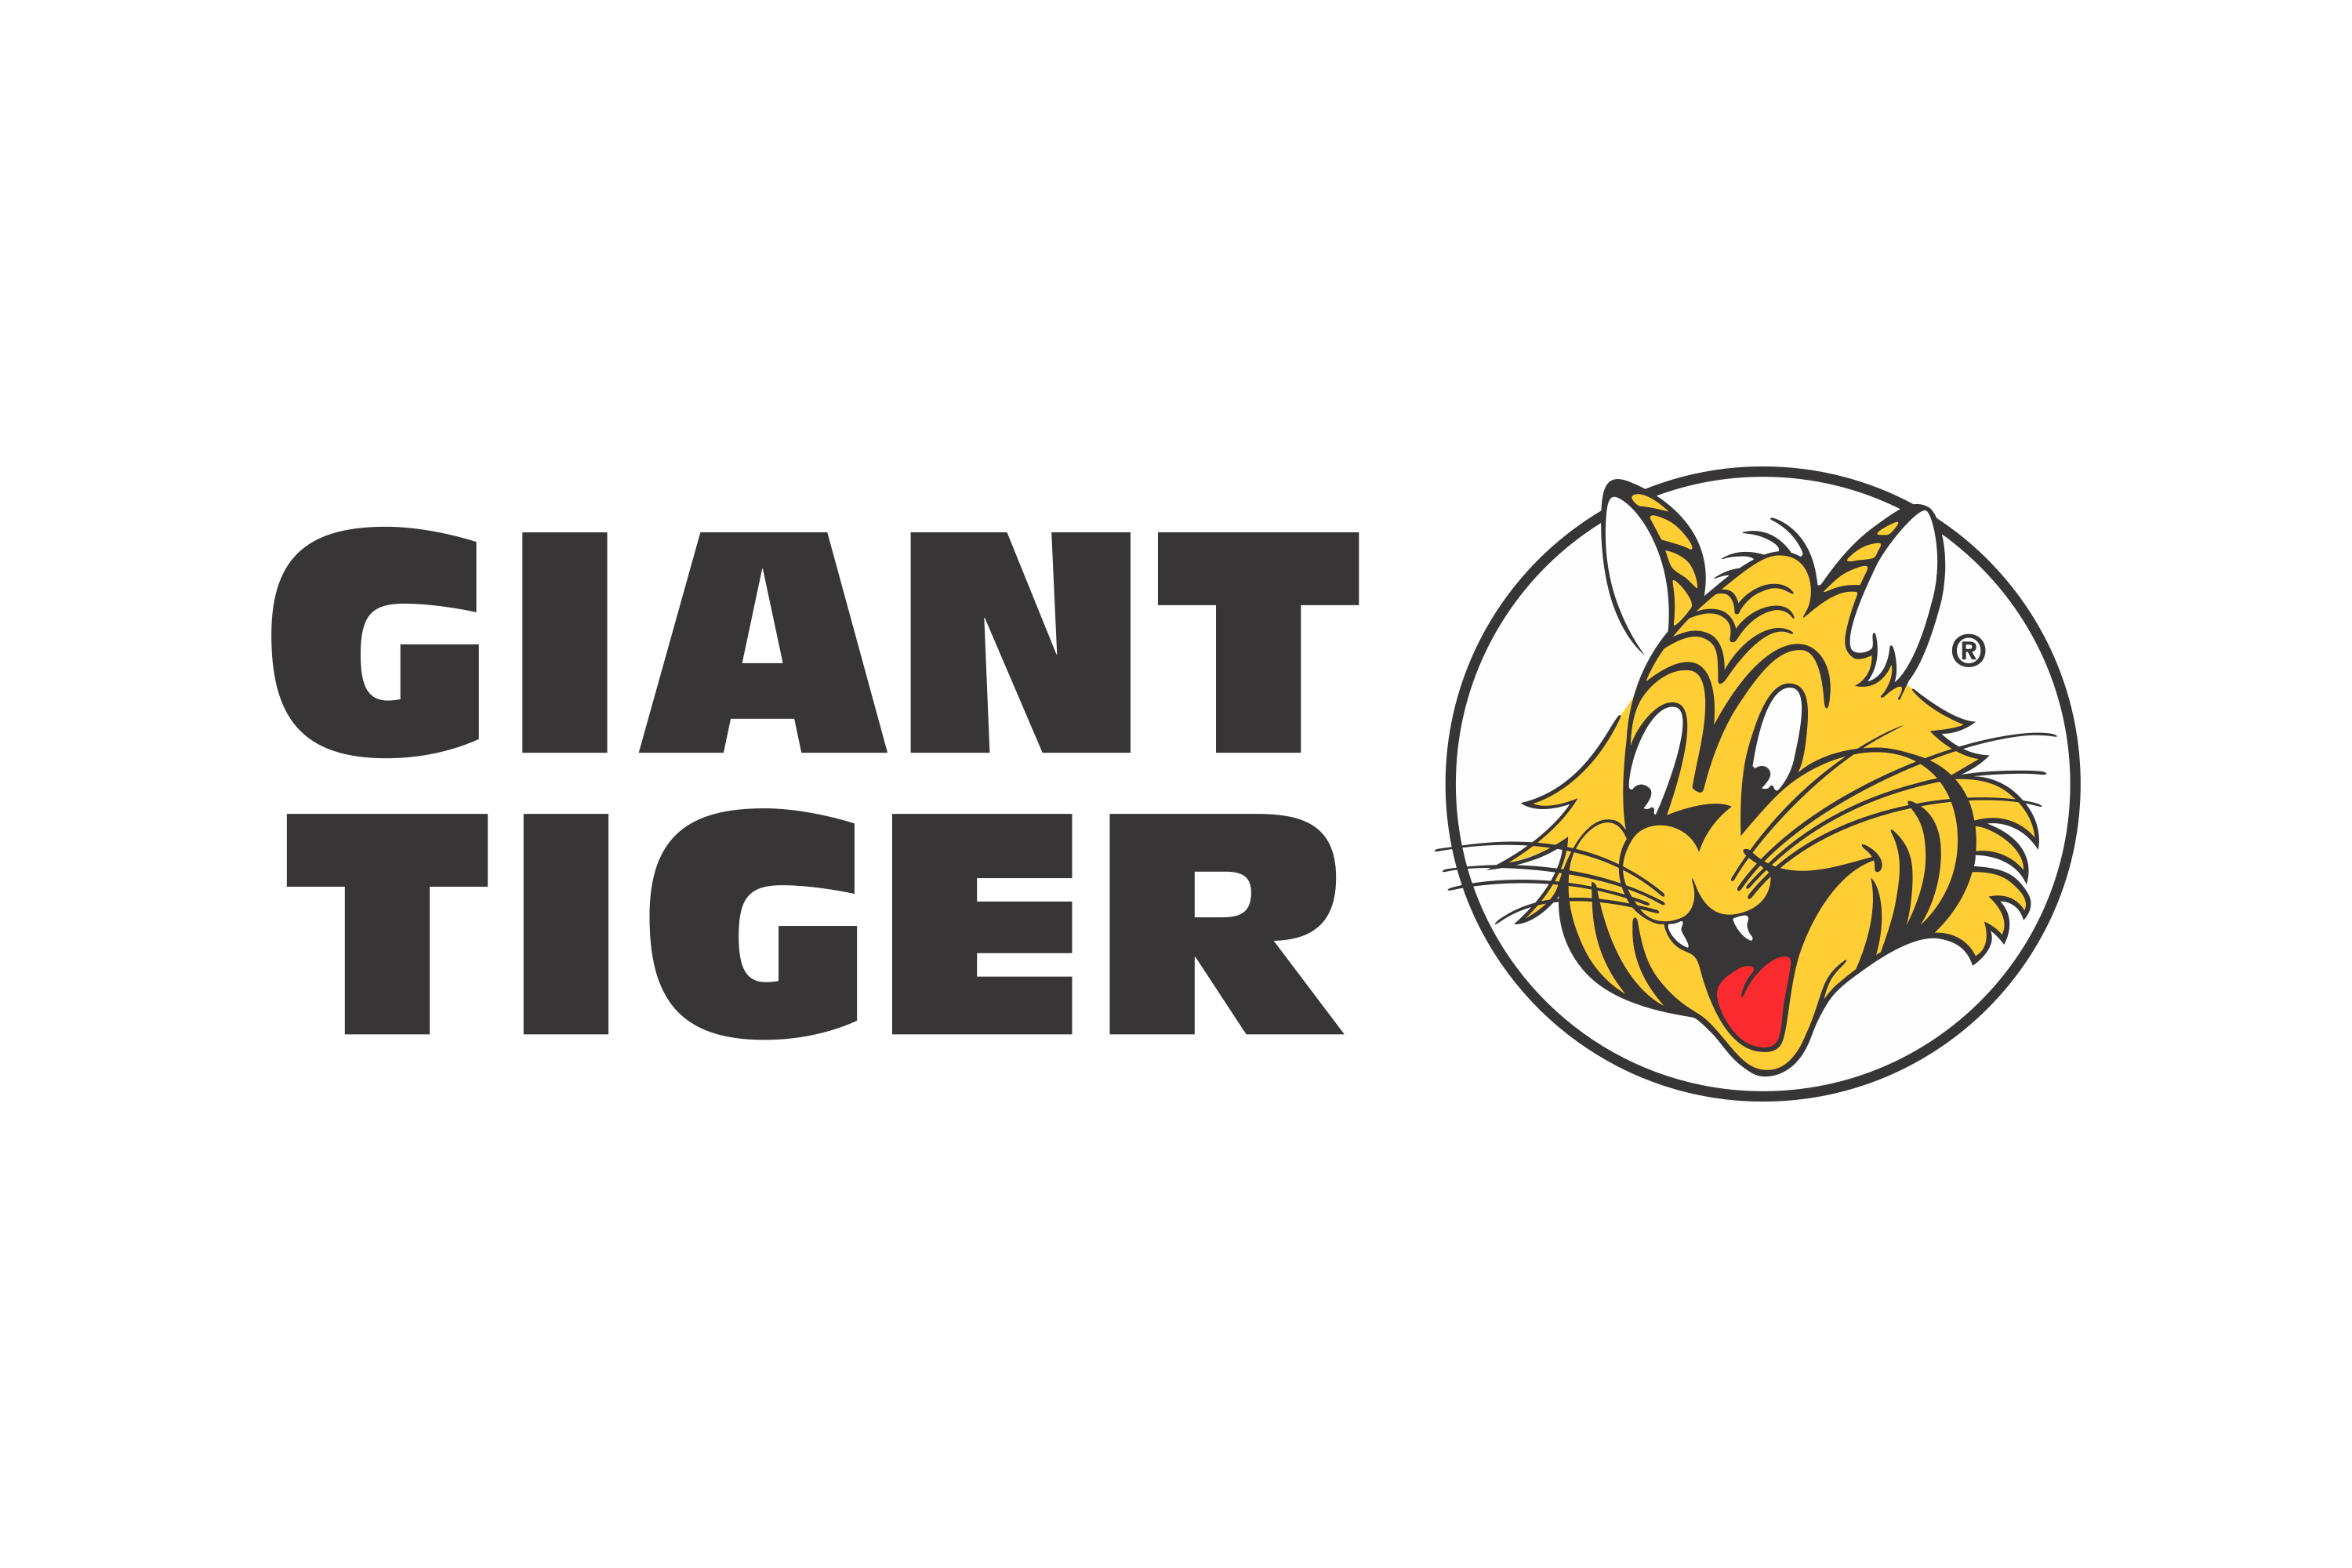 Download Giant Tiger Logo in SVG Vector or PNG File Format 